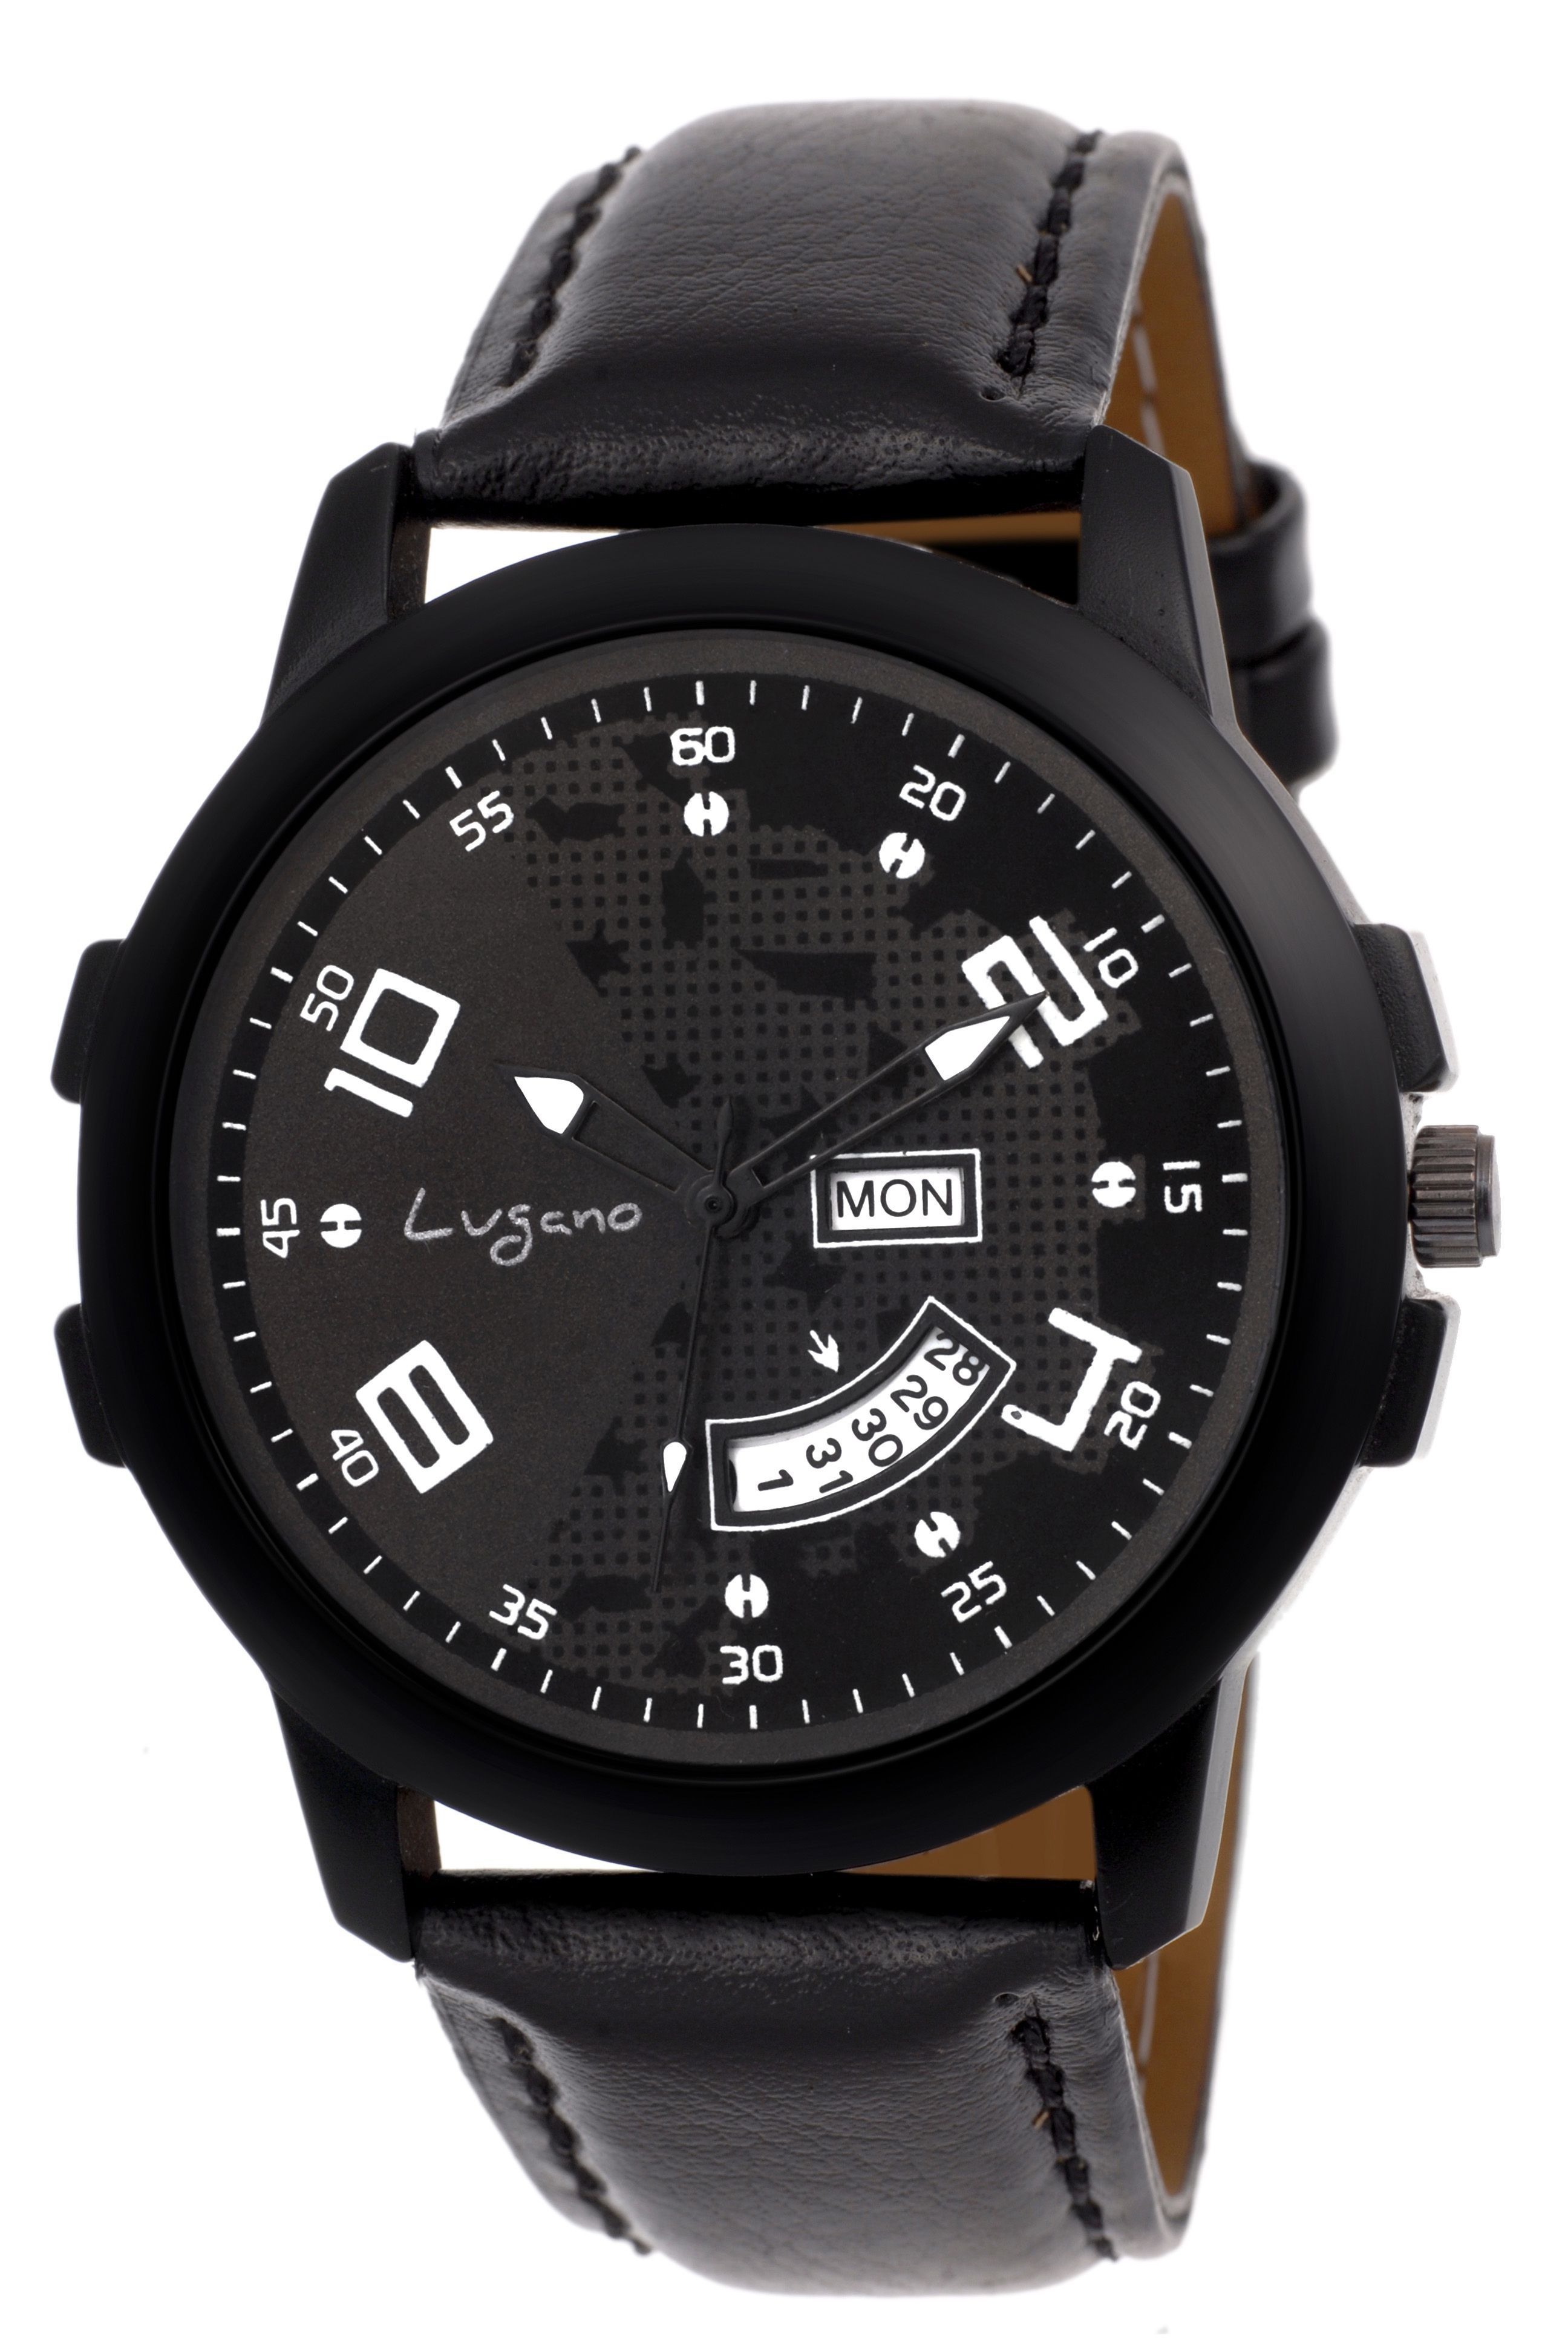 Lugano LG 1125 Leather Analog Men's Watch